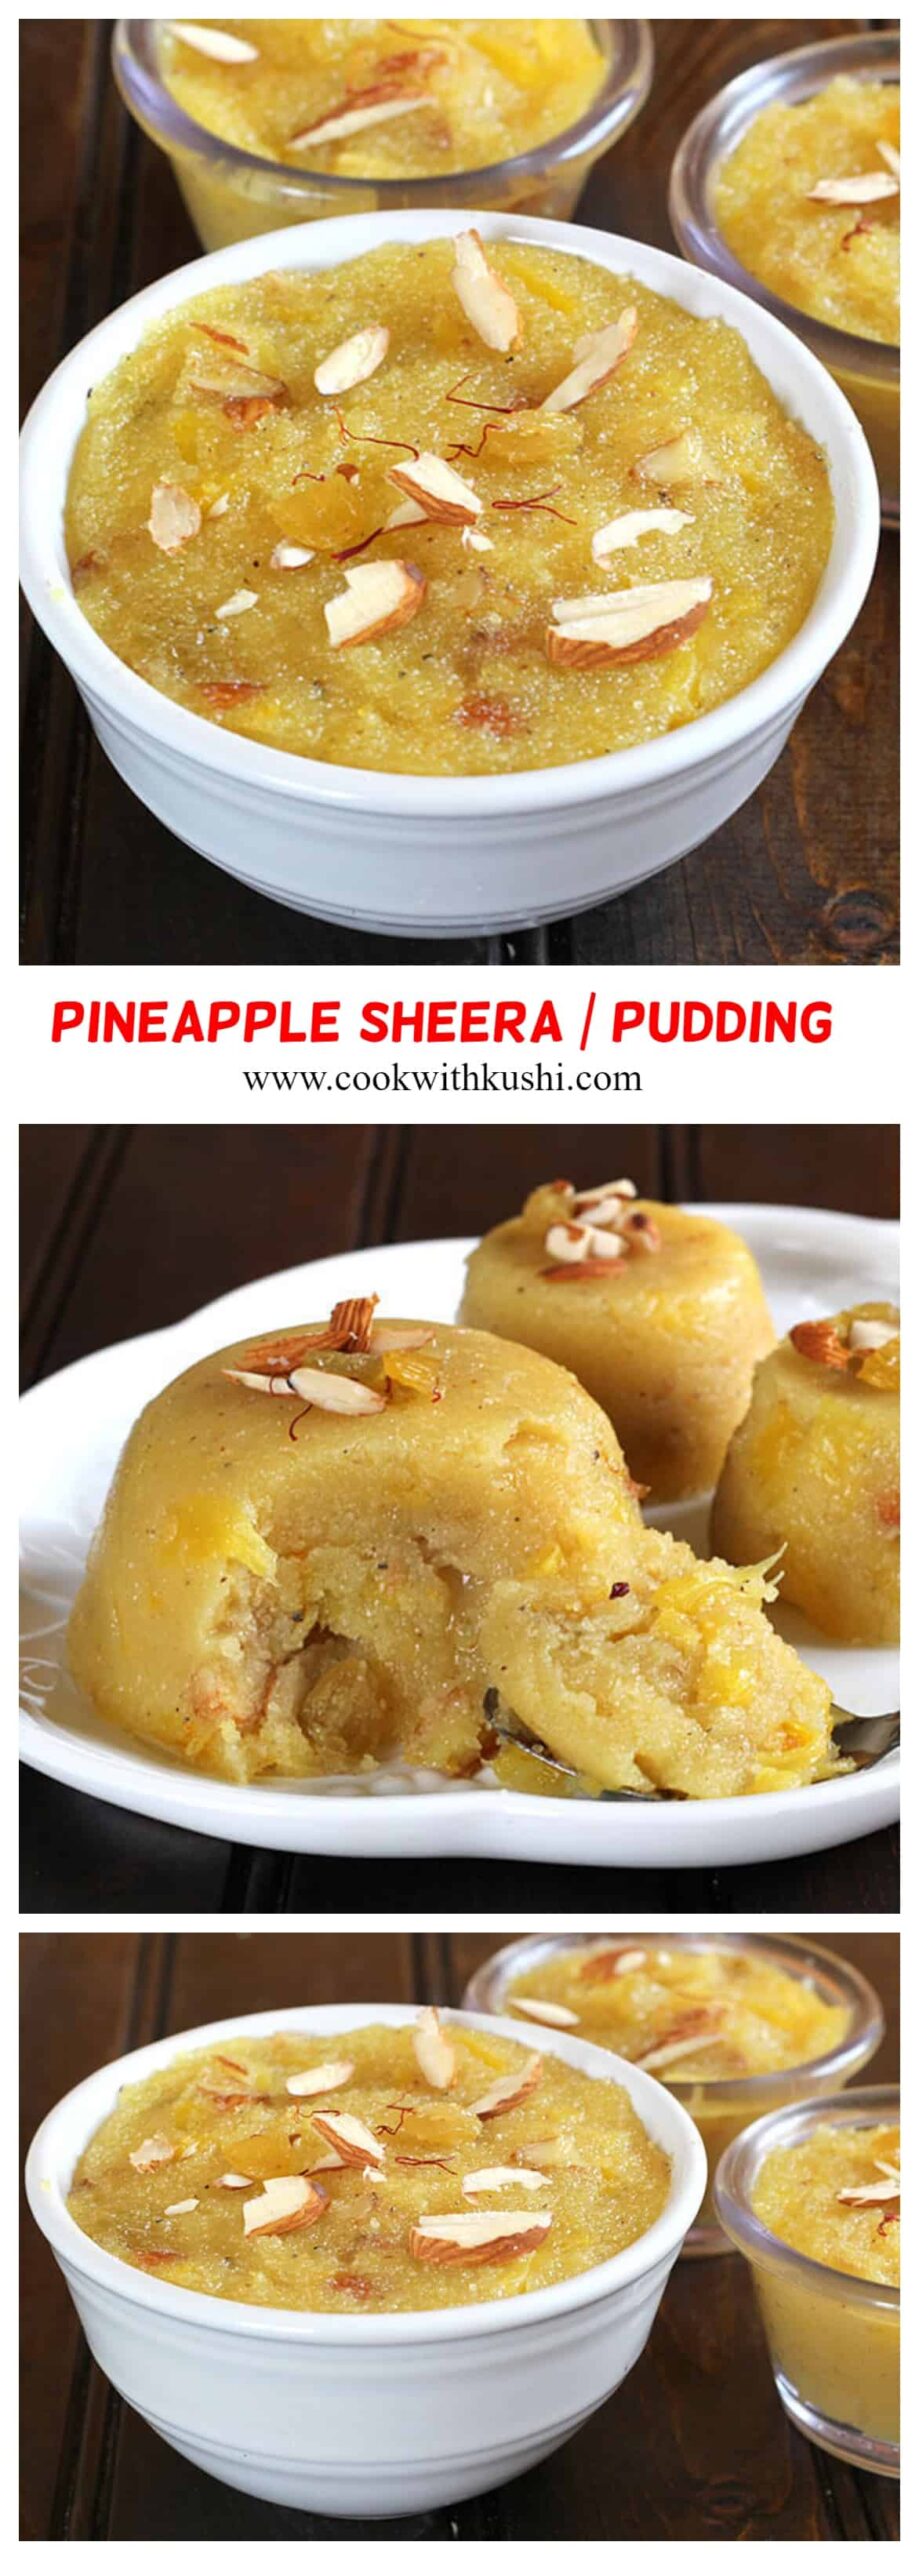 How to make Pineapple sheera, rava kesari bath, halwa or pudding